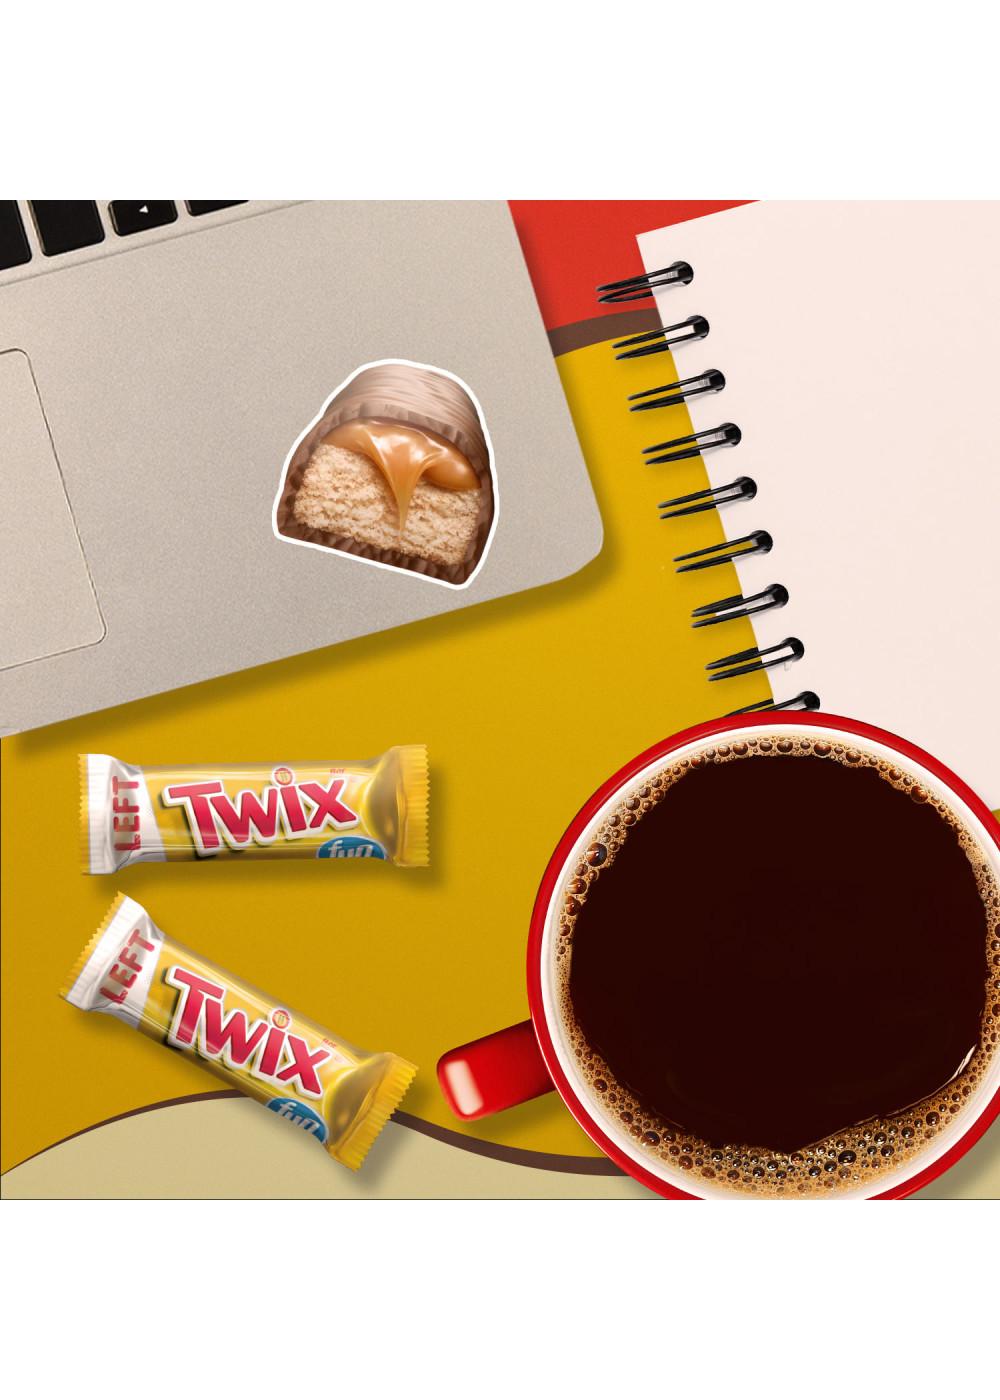 Twix Caramel Chocolate Cookie Fun Size Candy Bars; image 2 of 10